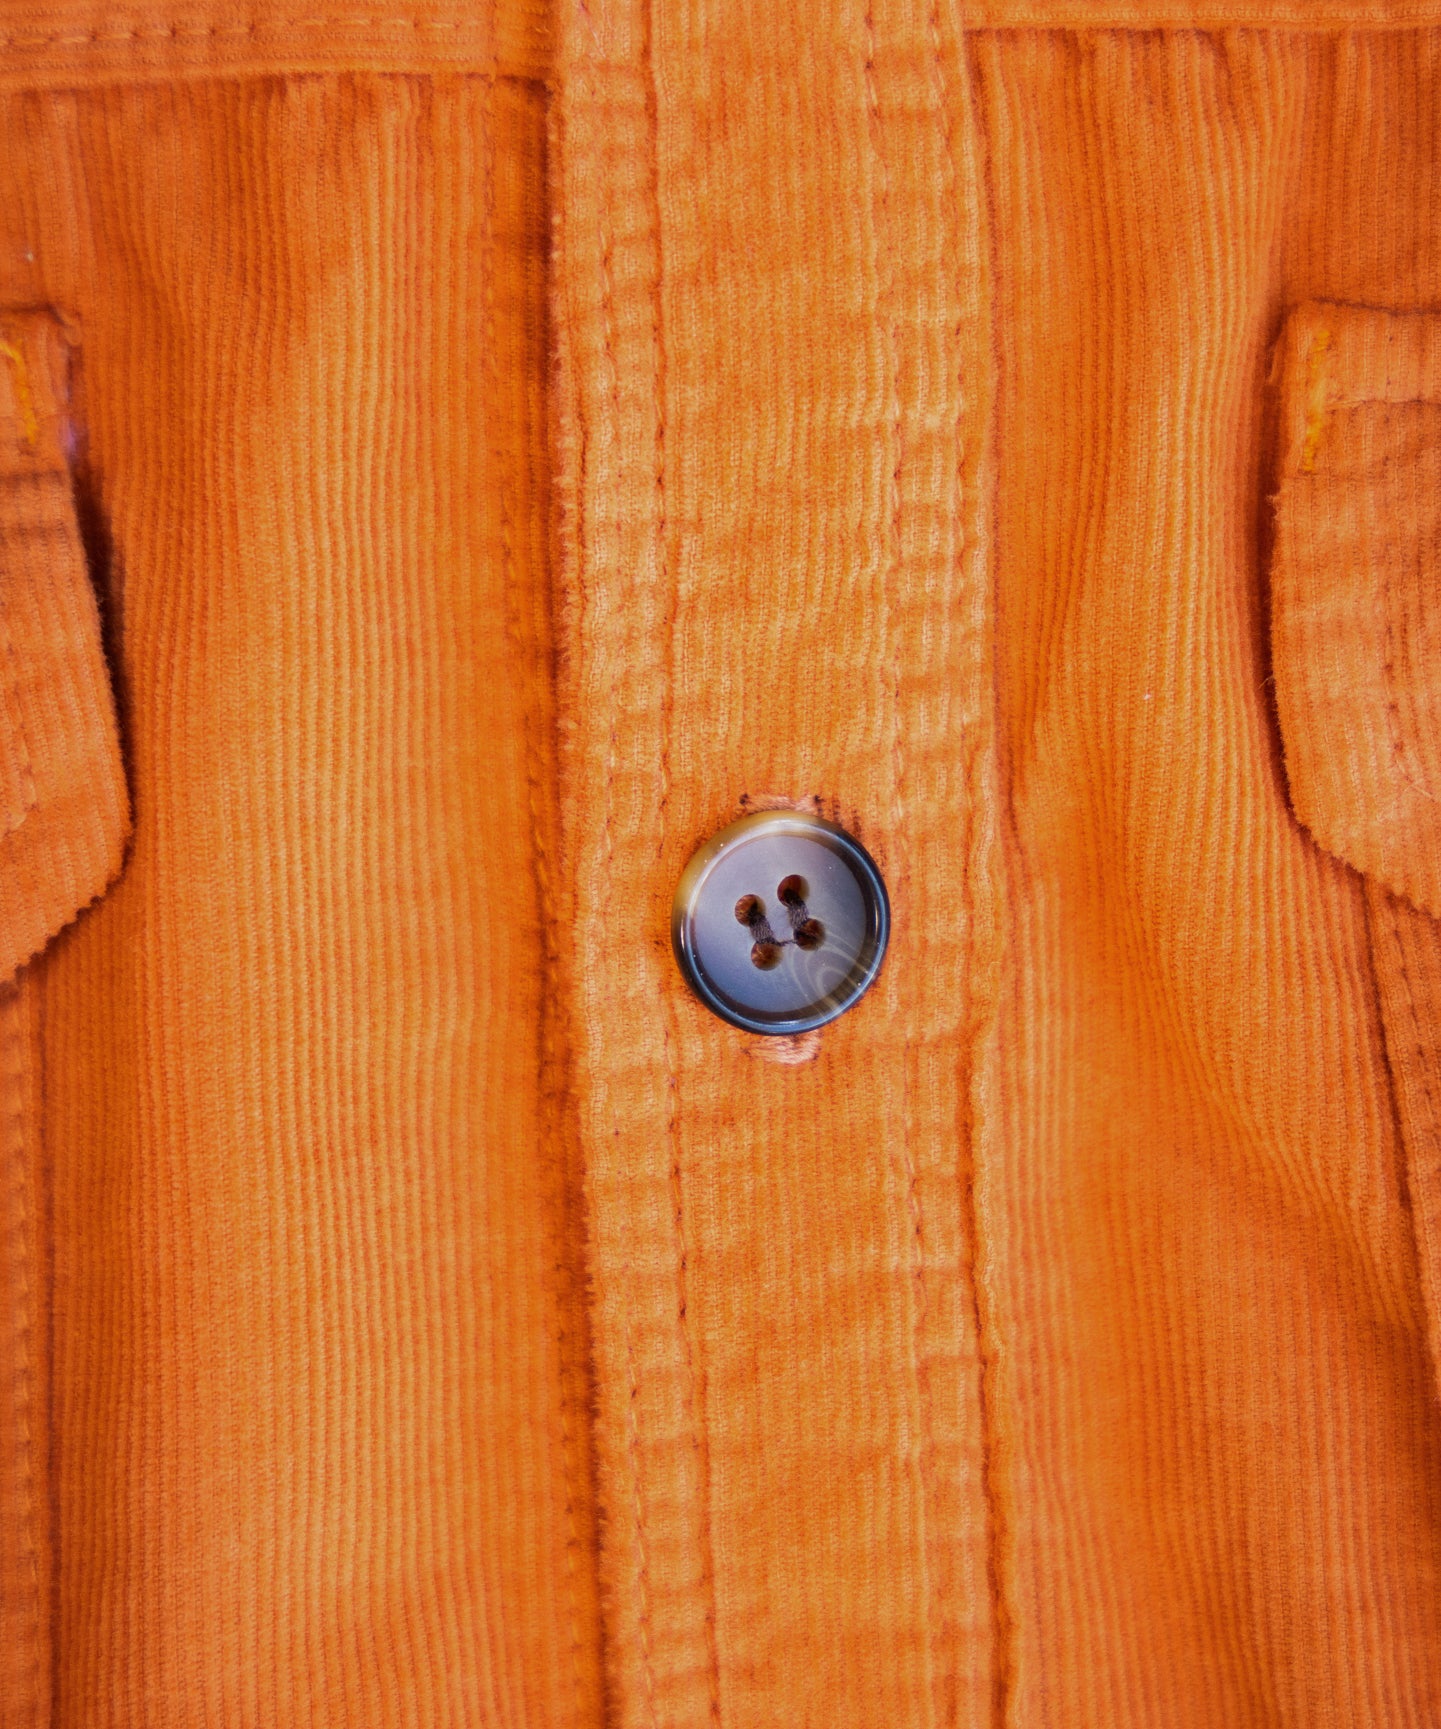 Corduroy Rover Shirt - Dark Orange